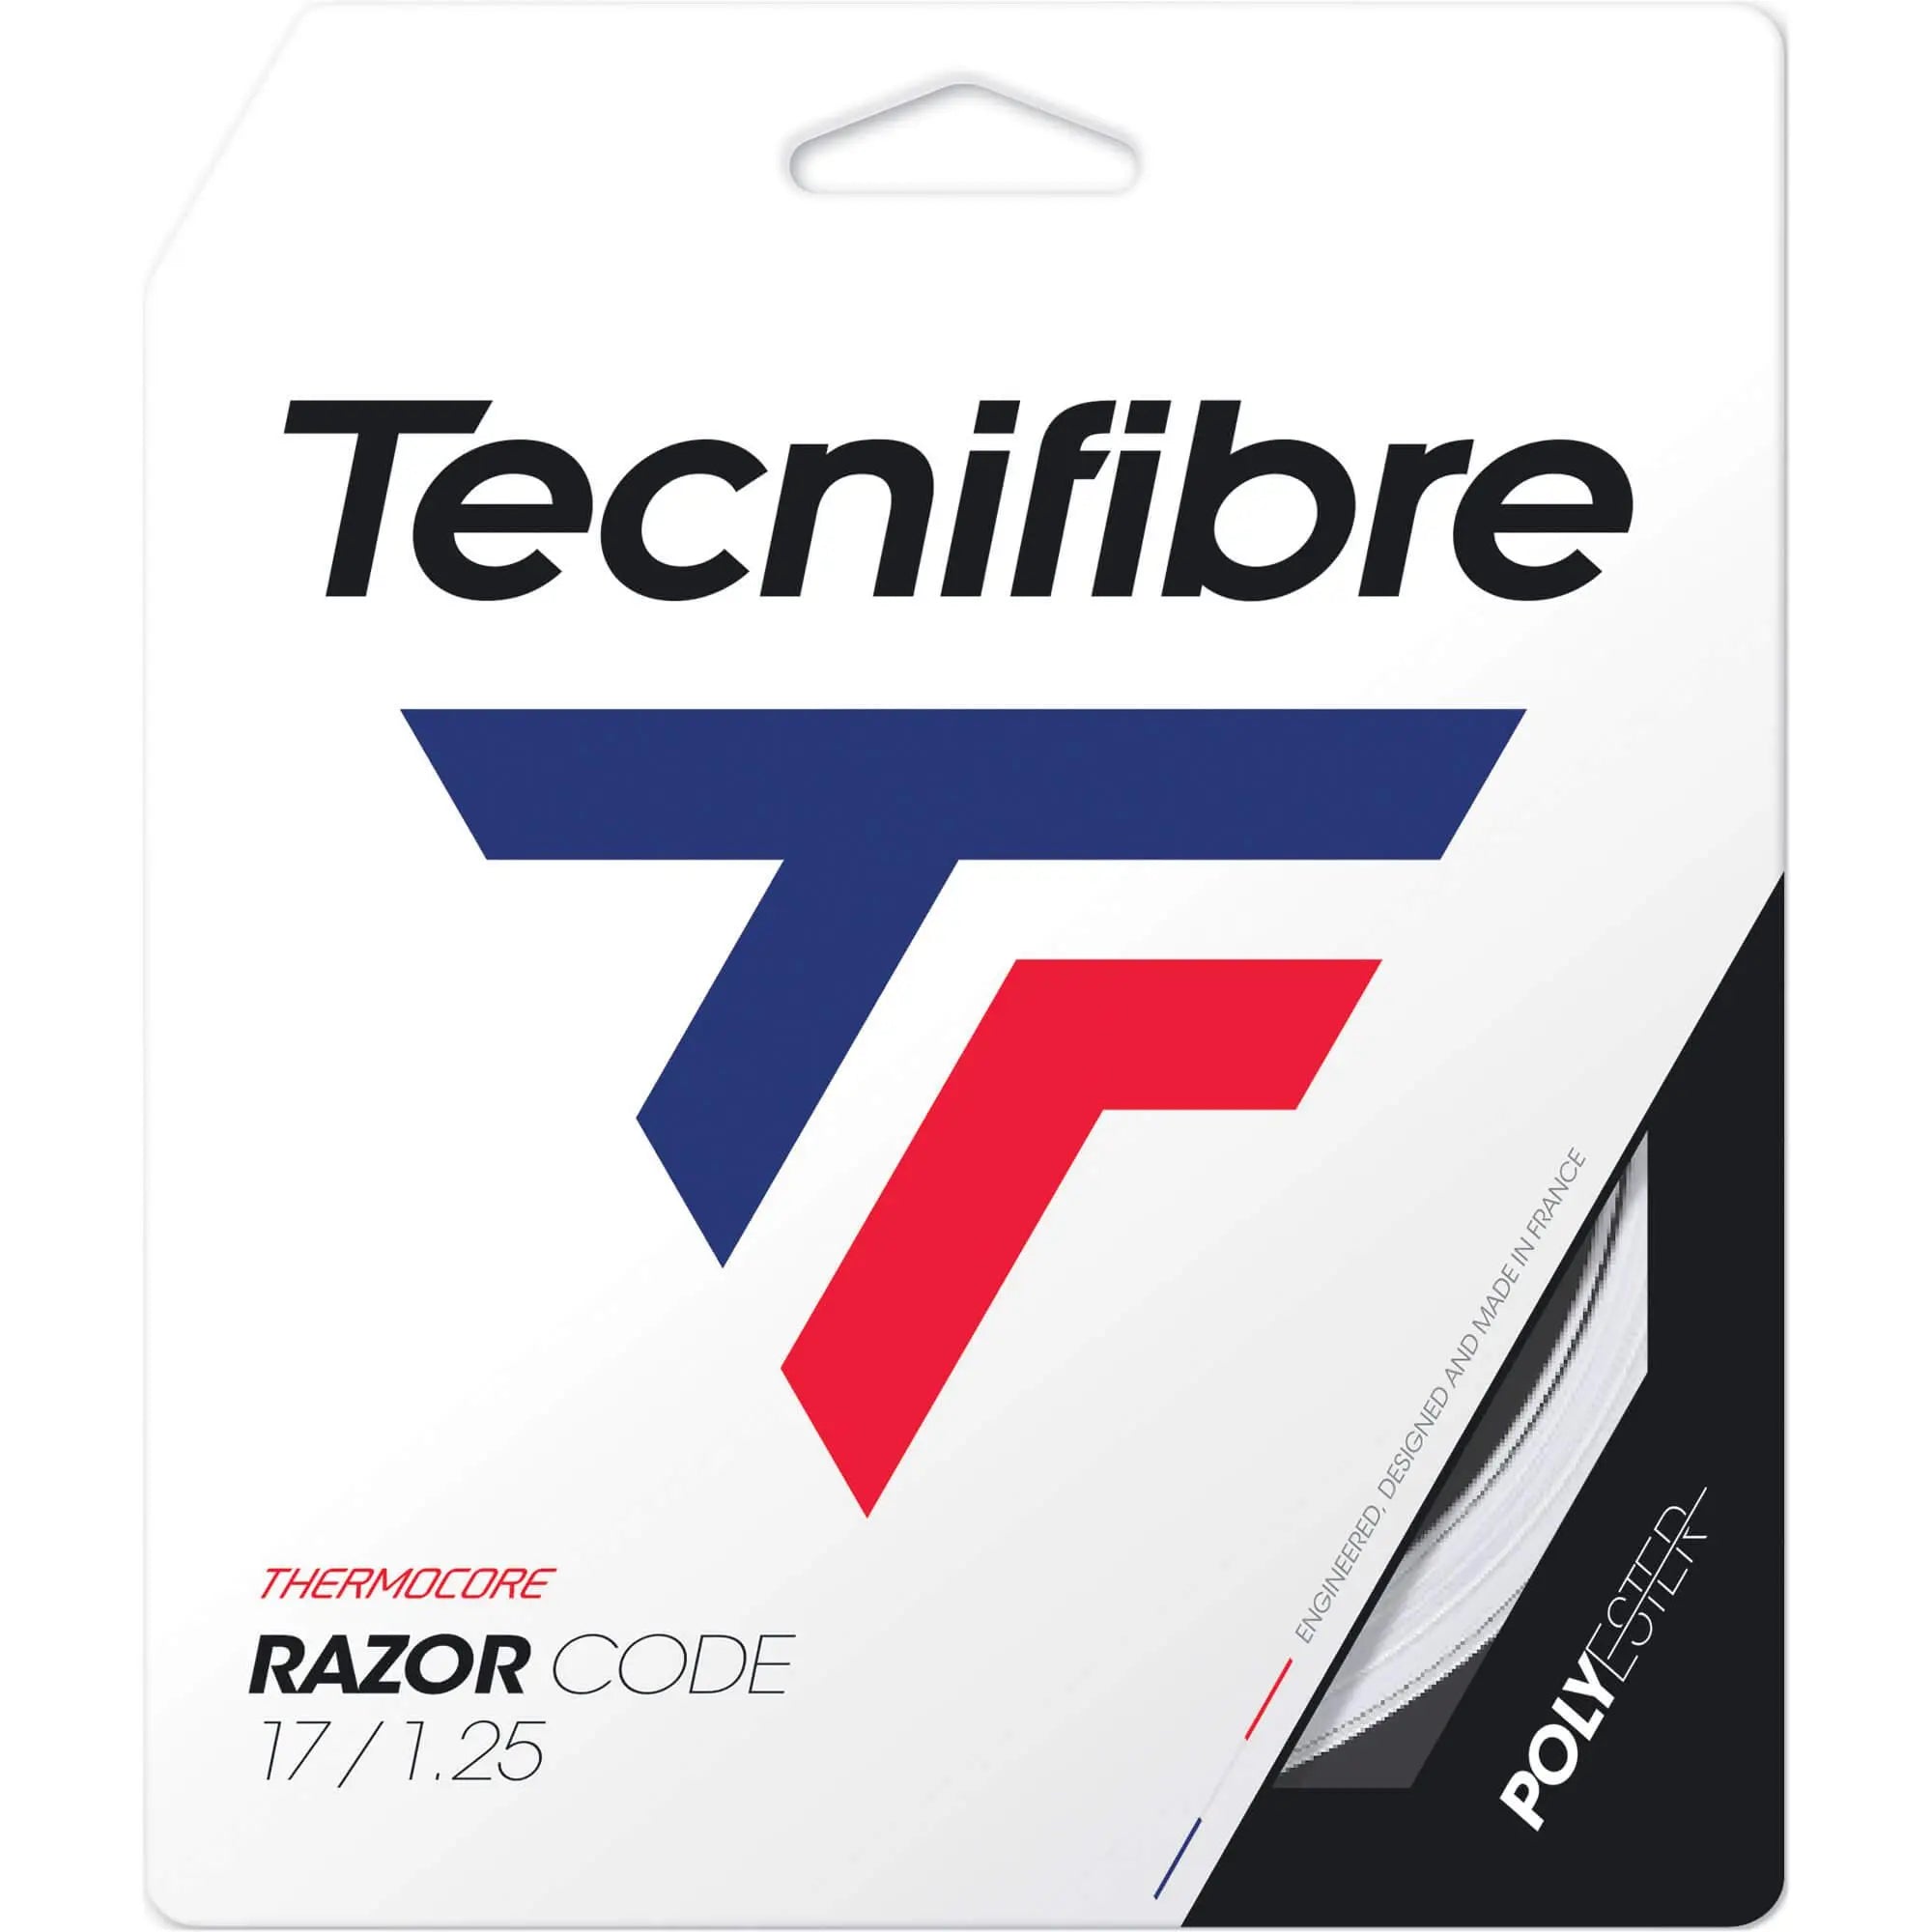 Tecnifibre Razor Code Tennis String - 1.30-The Racquet Shop-Shop Online in UAE, Saudi Arabia, Kuwait, Oman, Bahrain and Qatar